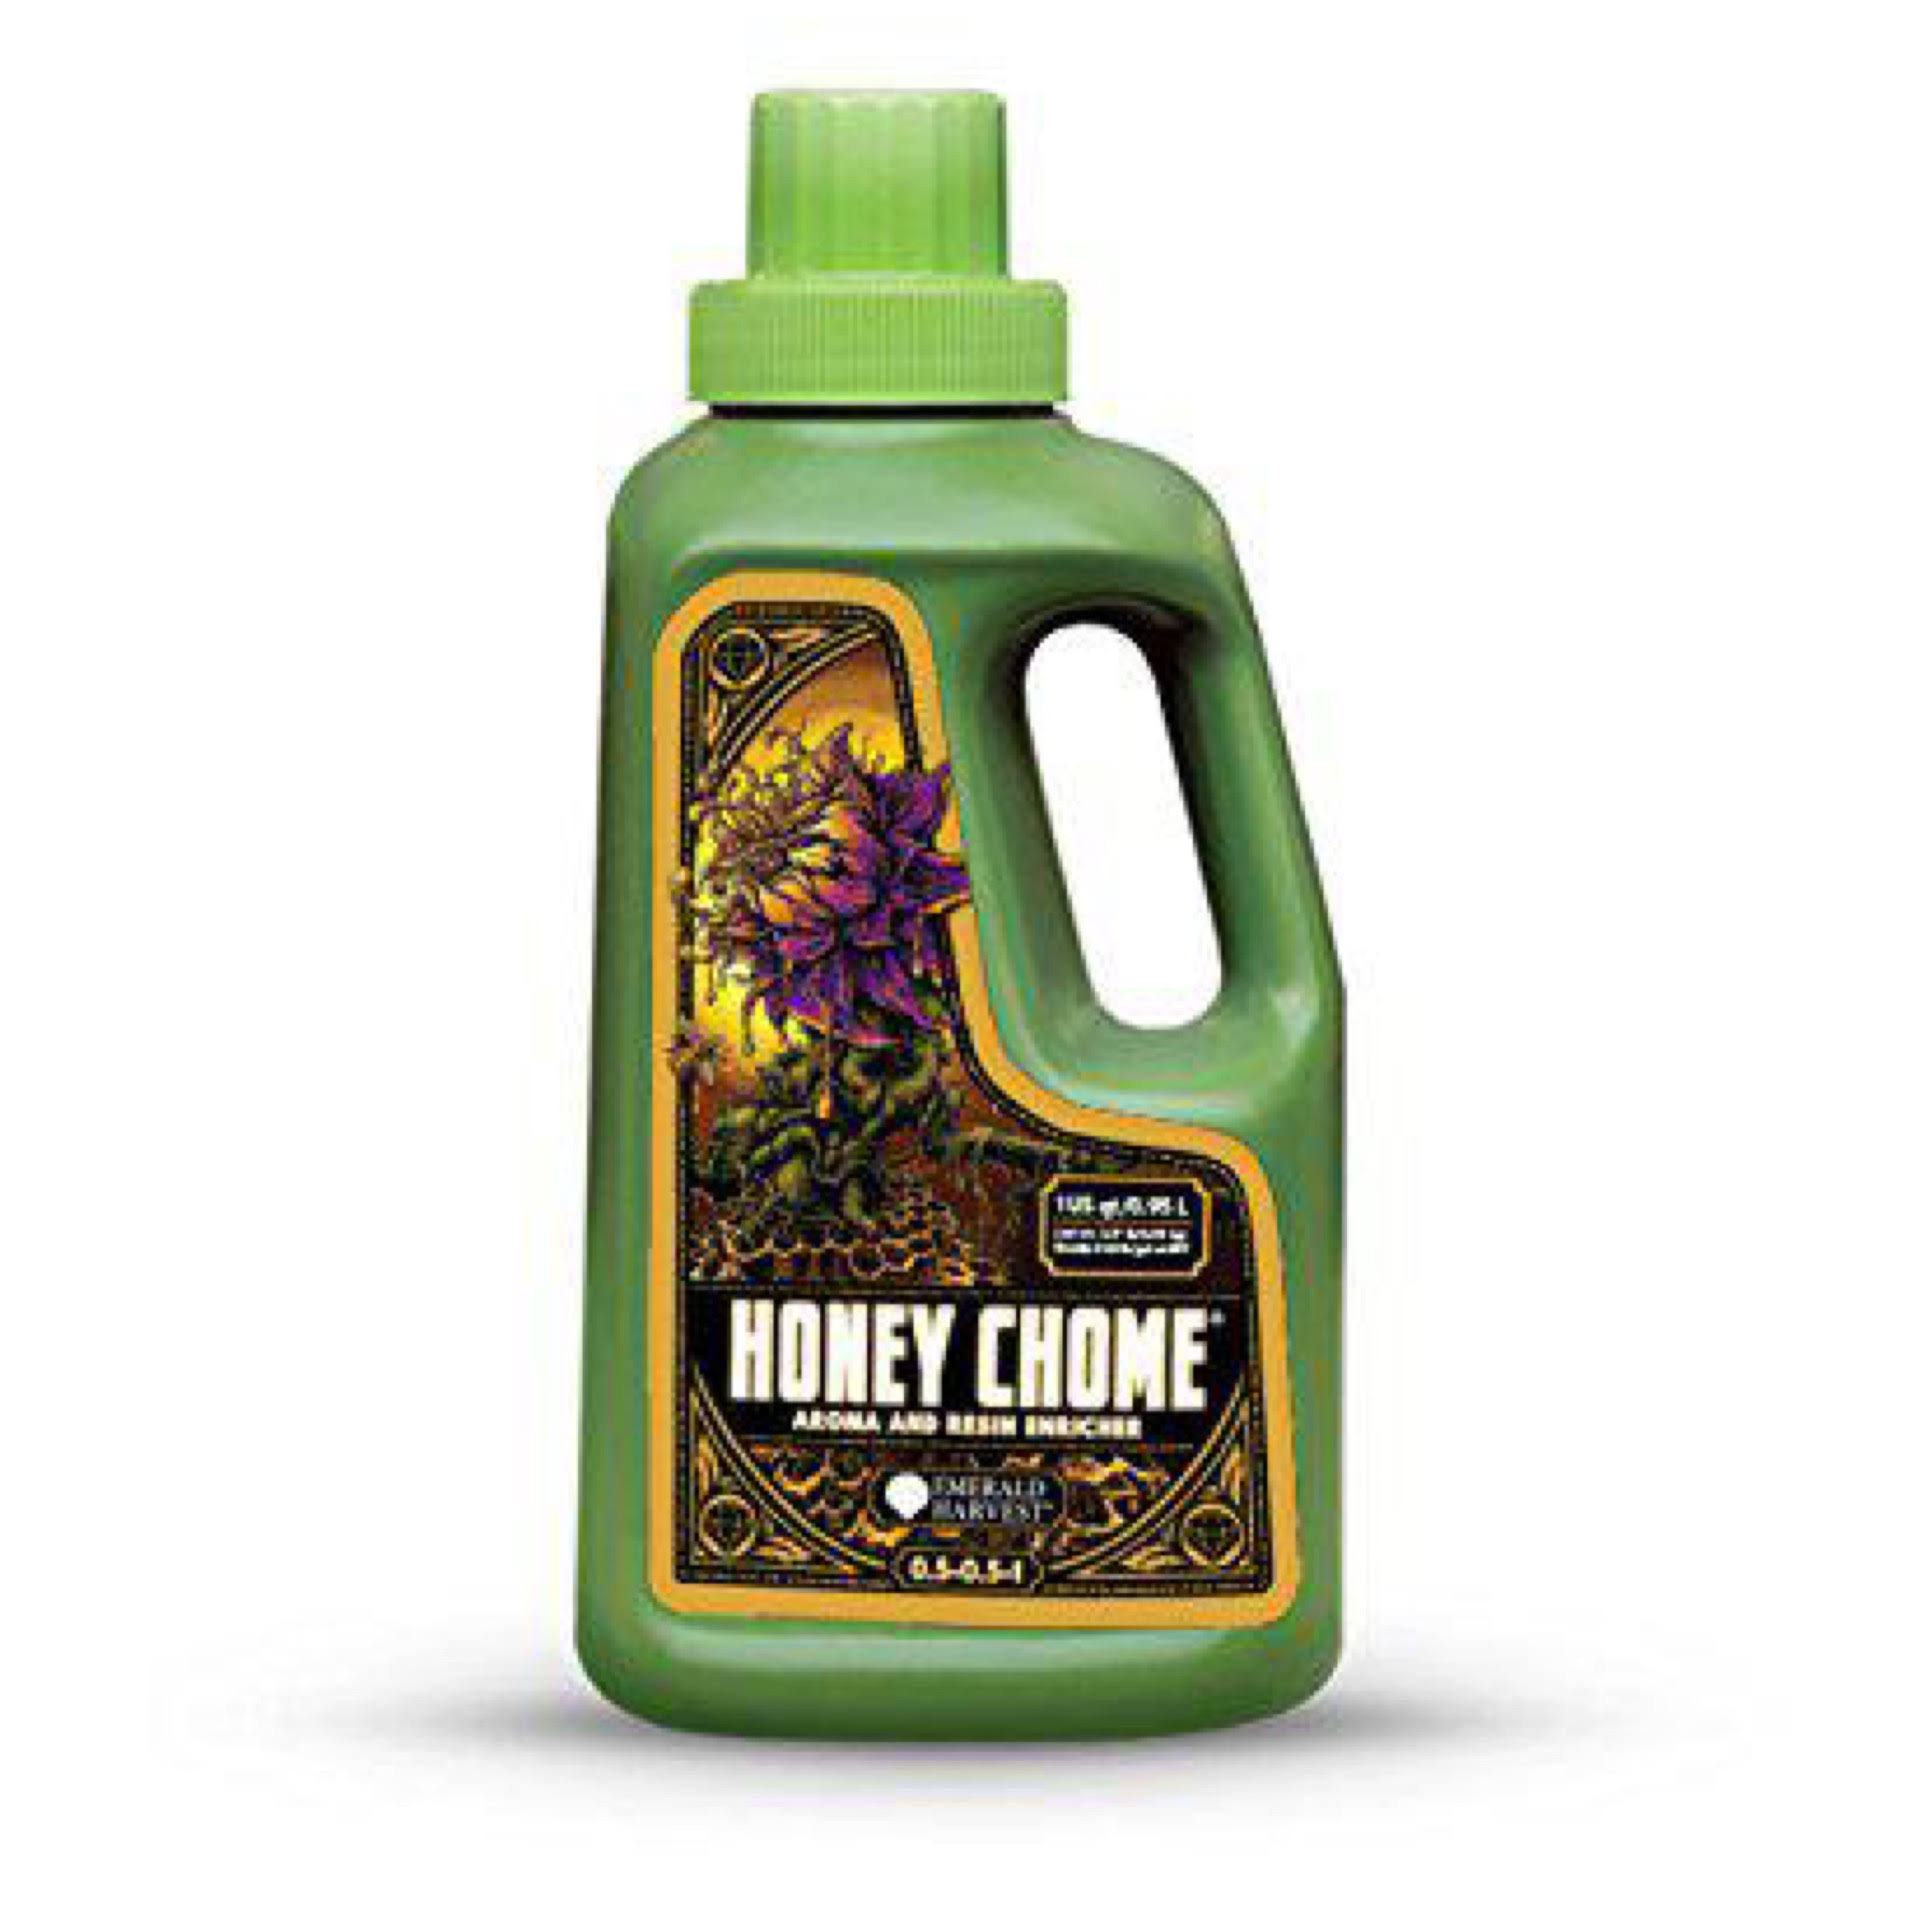 Emerald Harvest 723934 Honey Chome Fertilizer - 0.95L